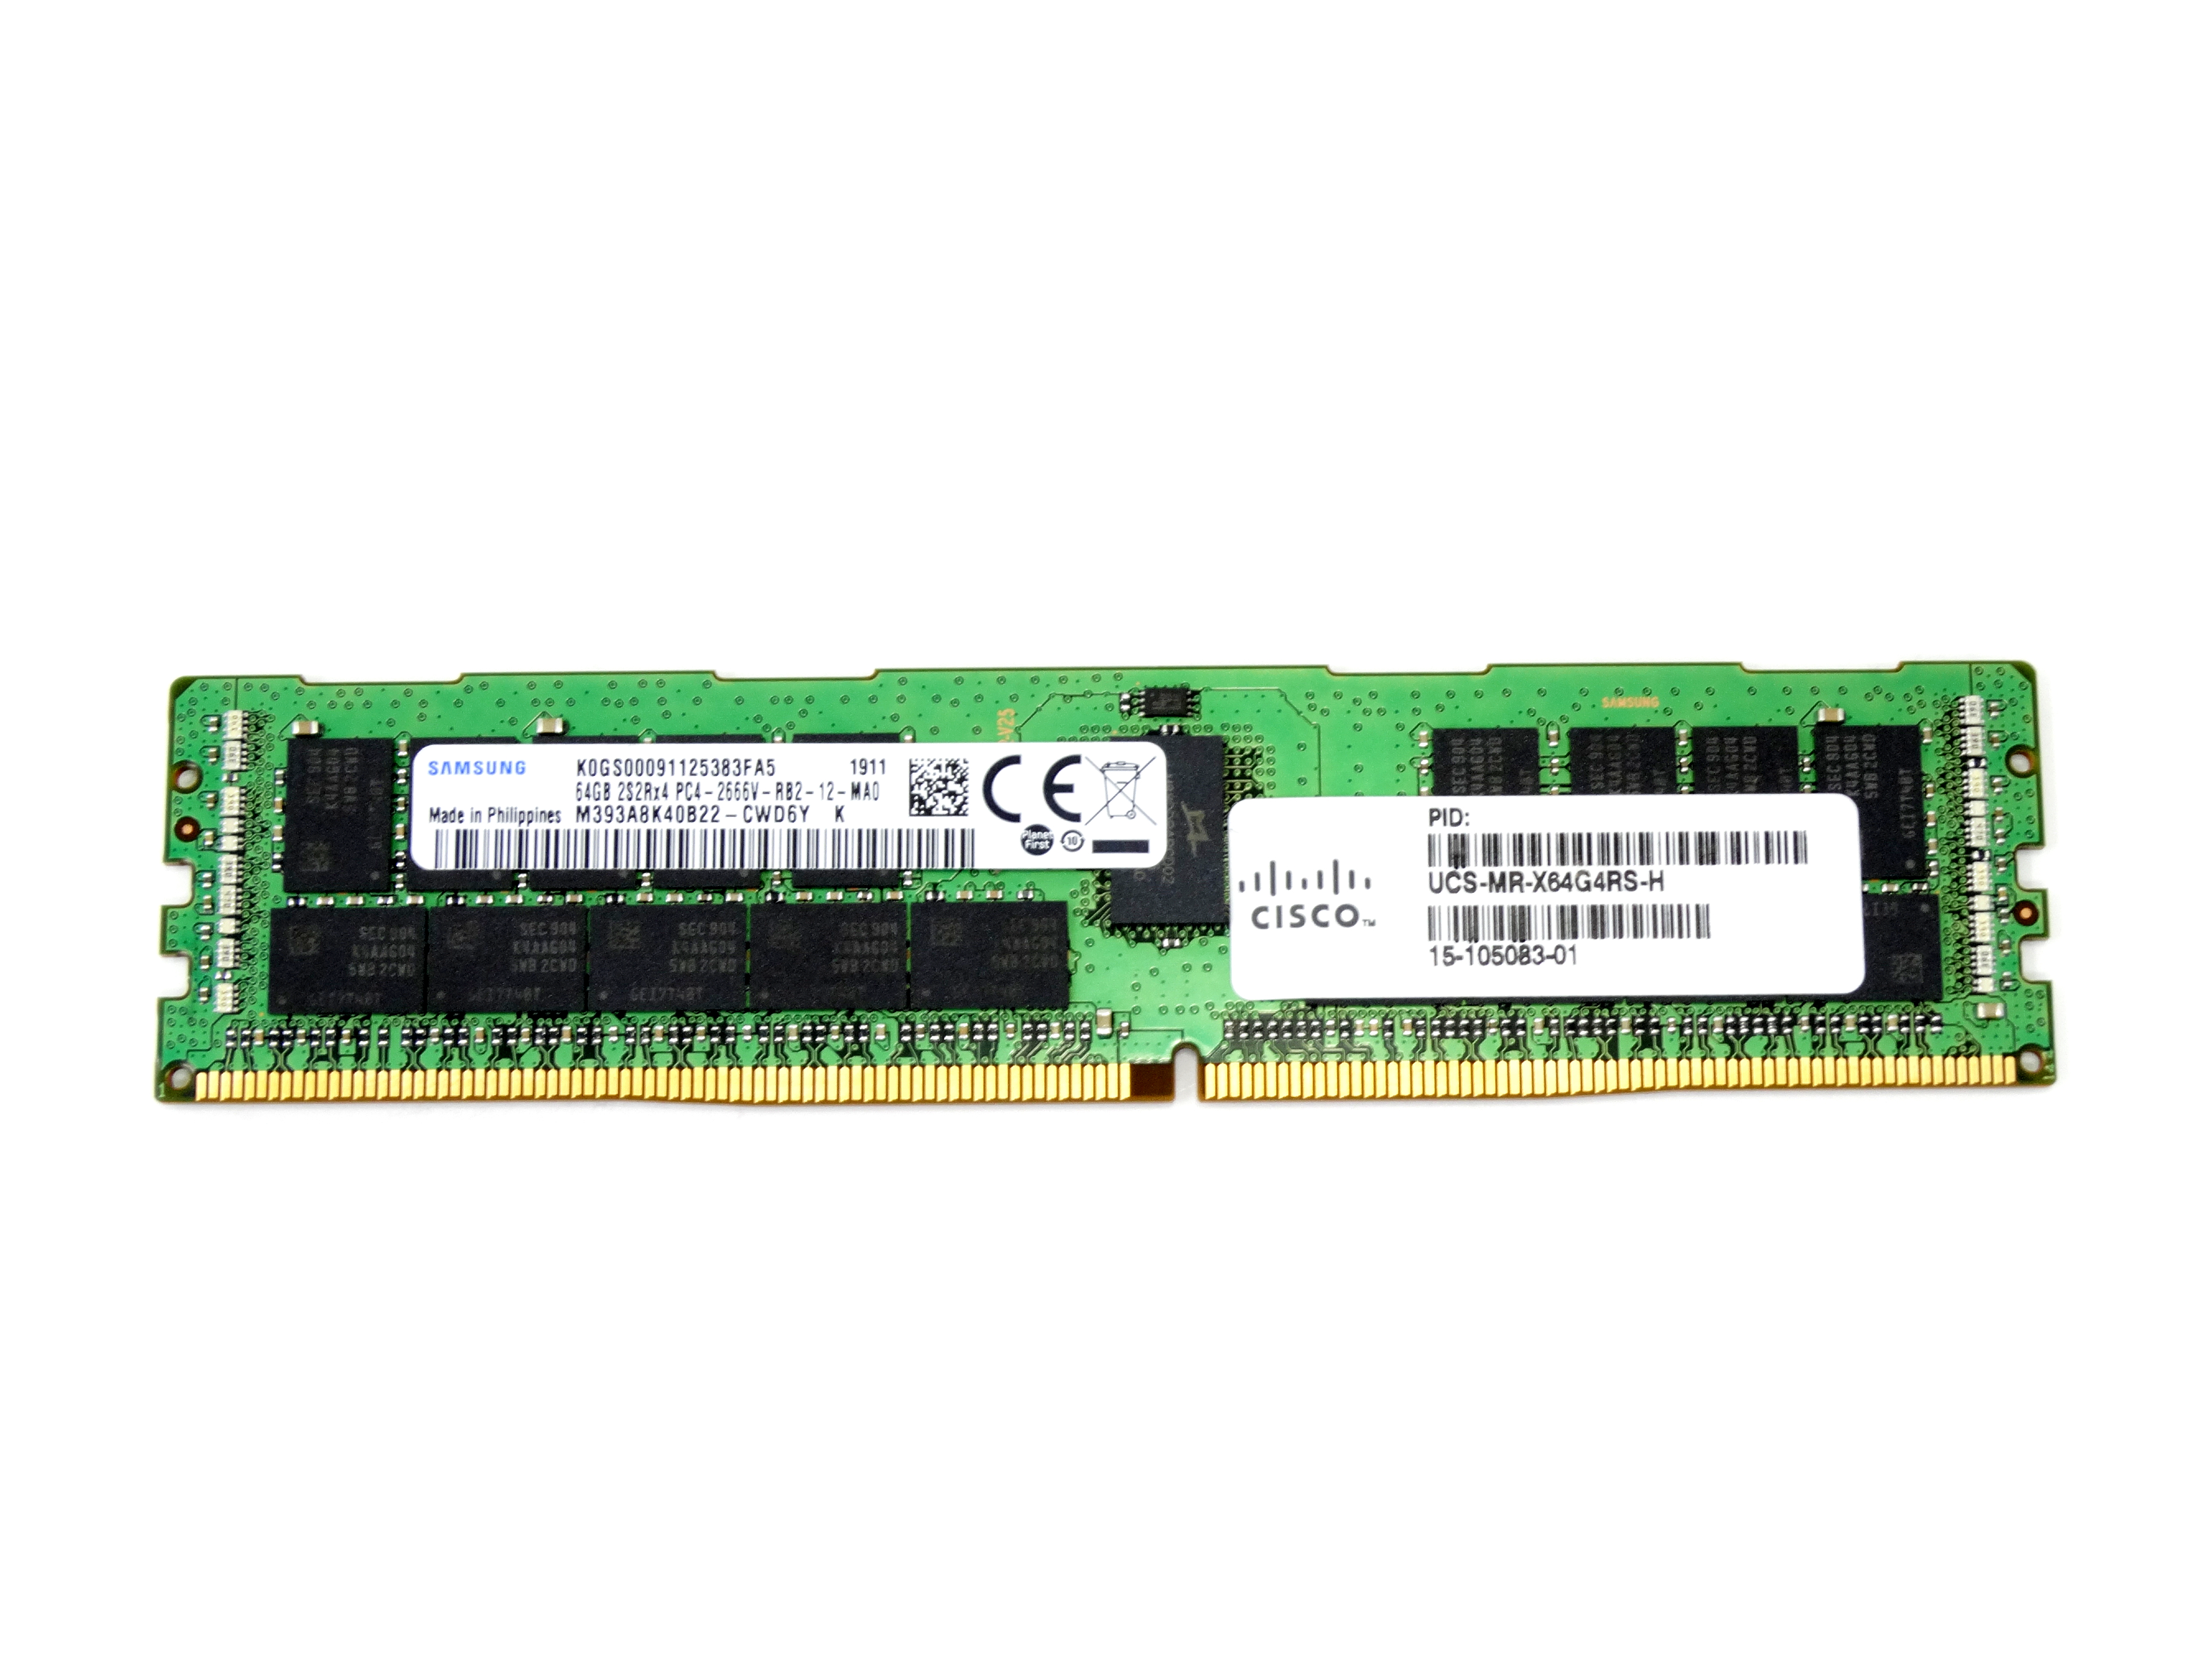 Cisco 64GB 2S2Rx4 PC4-2666V DDR4 ECC Registered SDRAM Quad Memory (M386A8K40BM2-CTD - UCS-ML-X64G4RS-H)